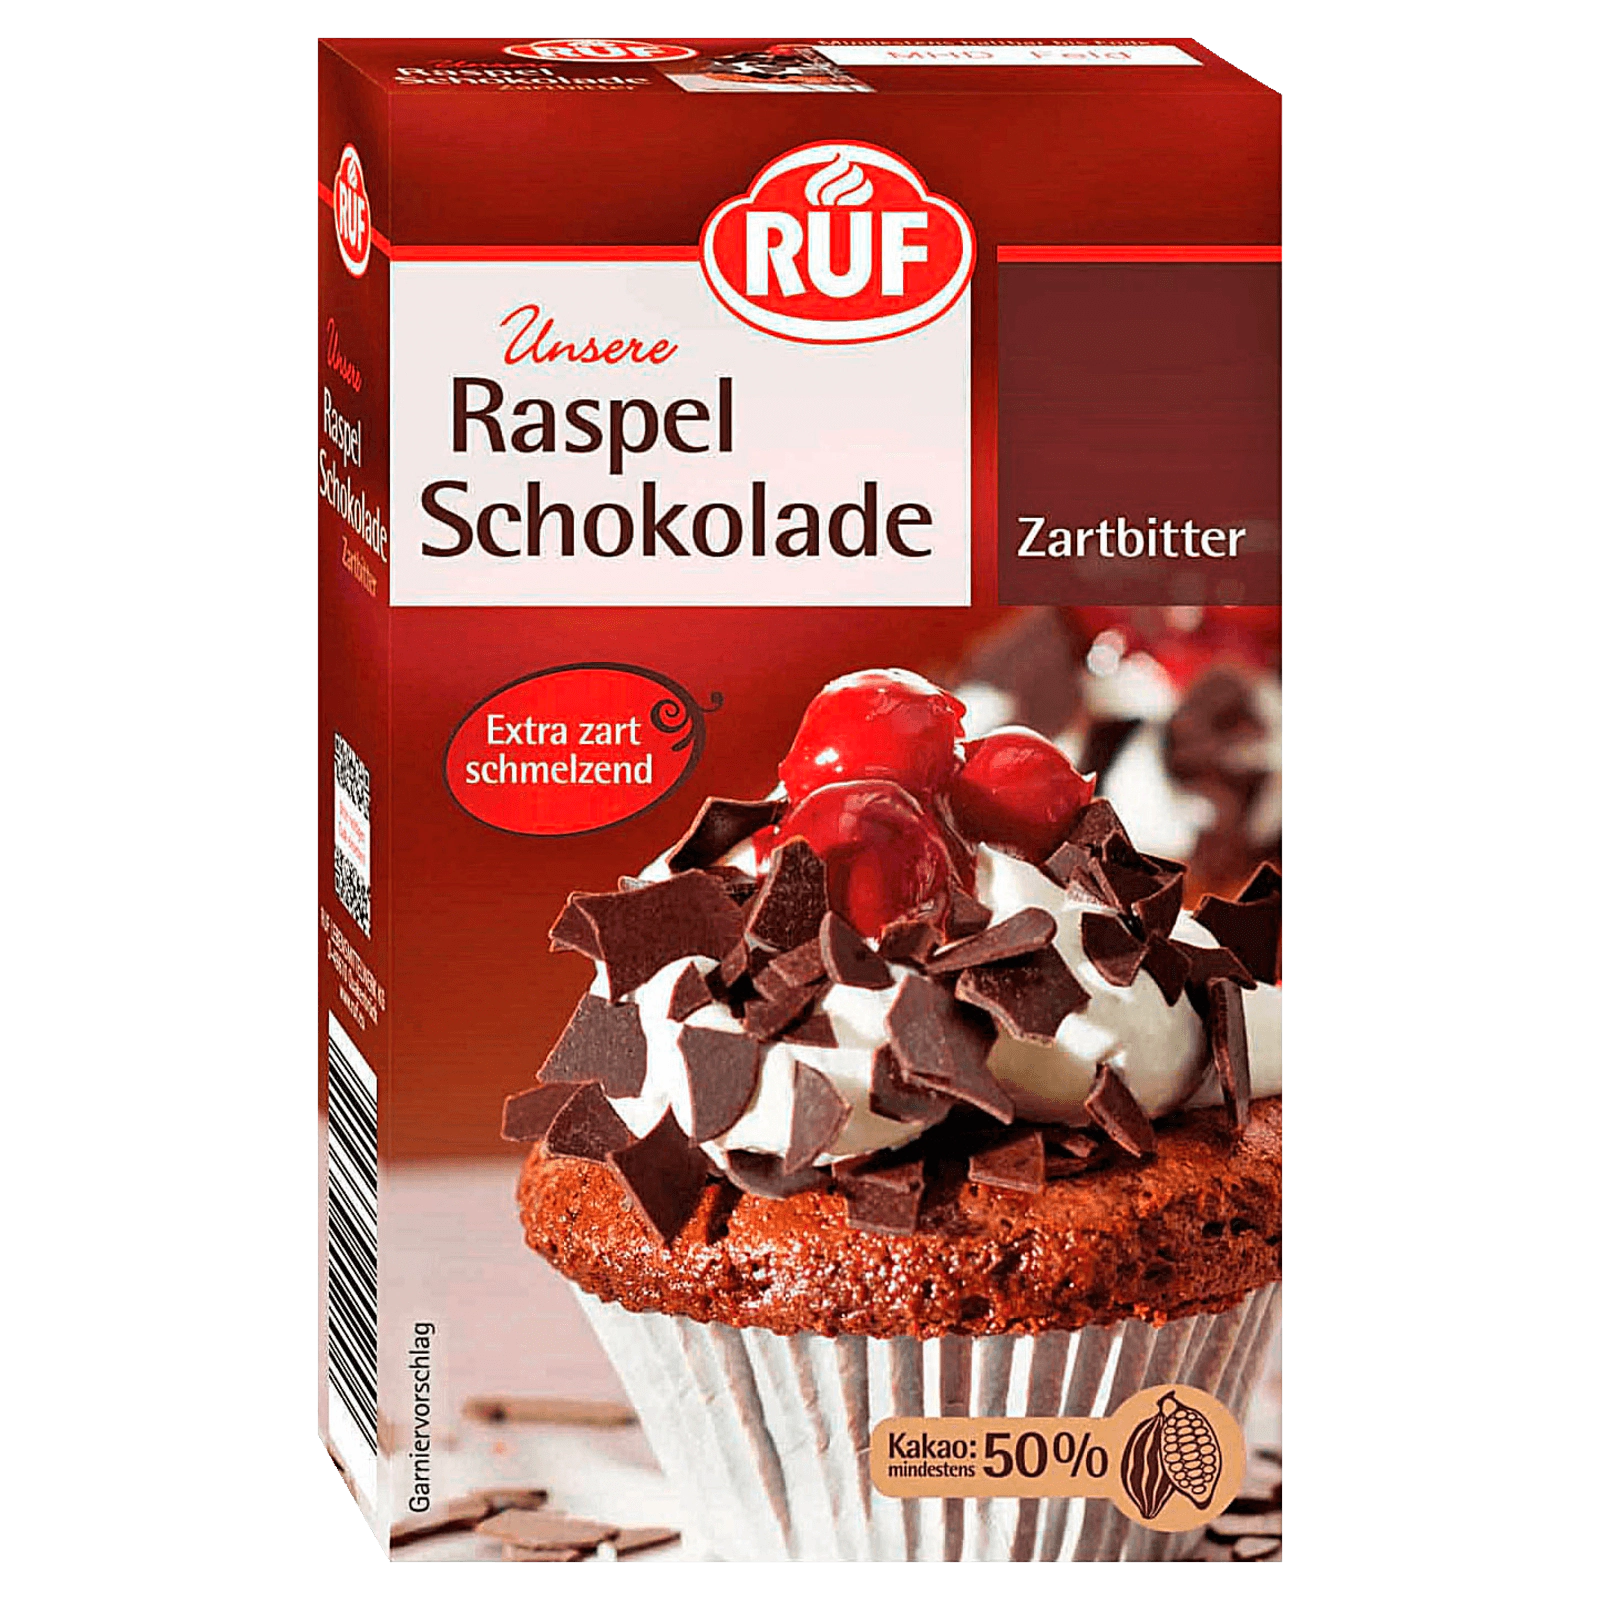 Ruf Raspel-Schokolade Zartbitter 100g  für 1.49 EUR